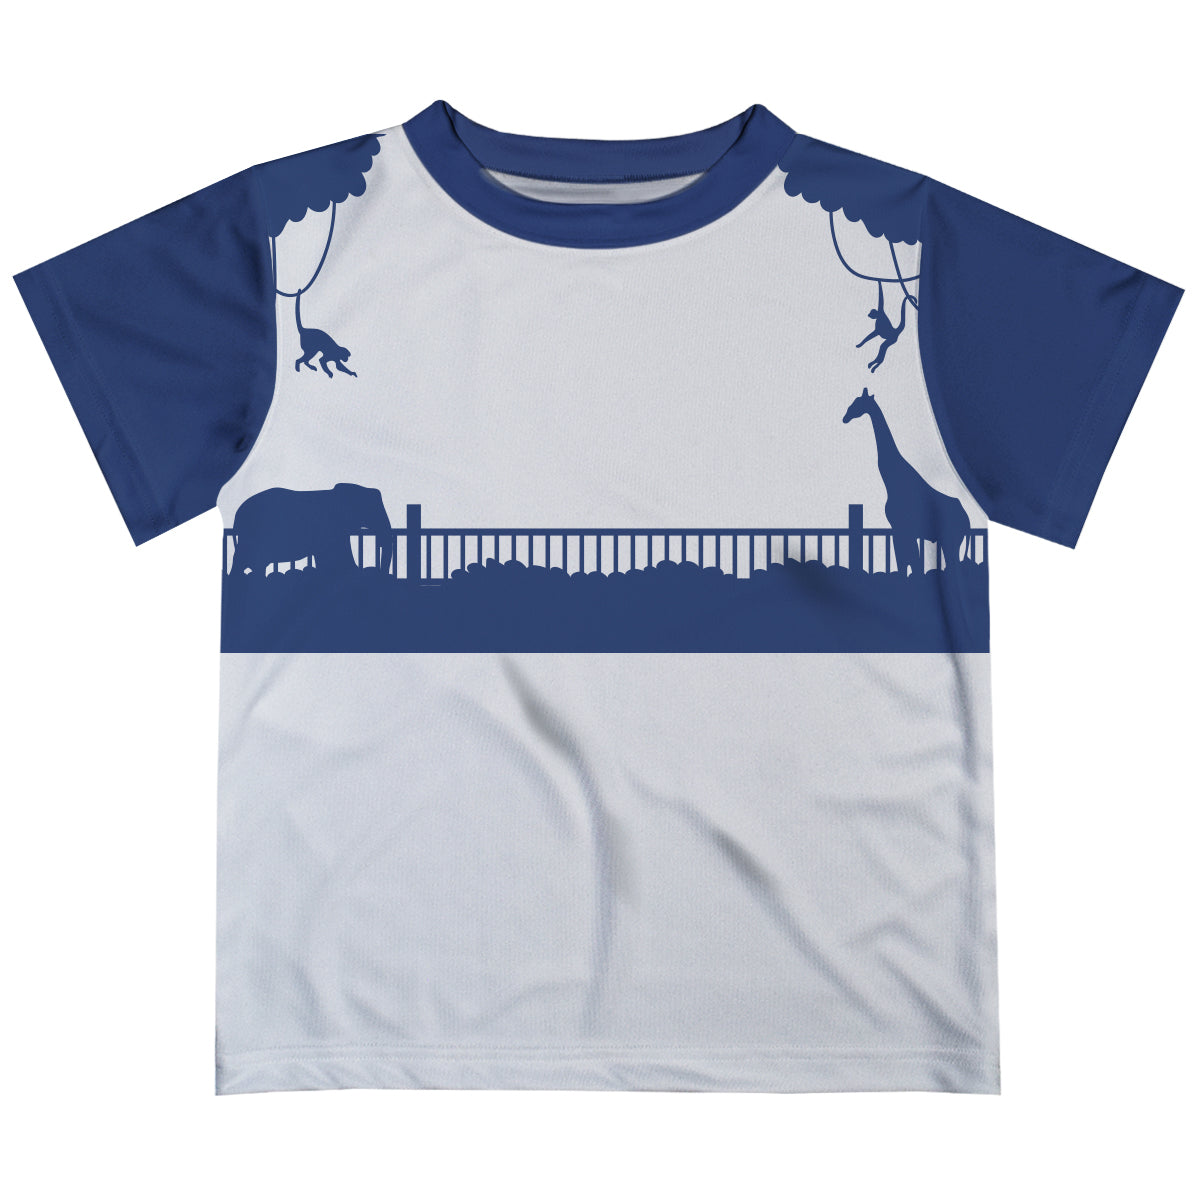 Elephant White and Navy Short Sleeve Boys Tee Shirt - Wimziy&Co.